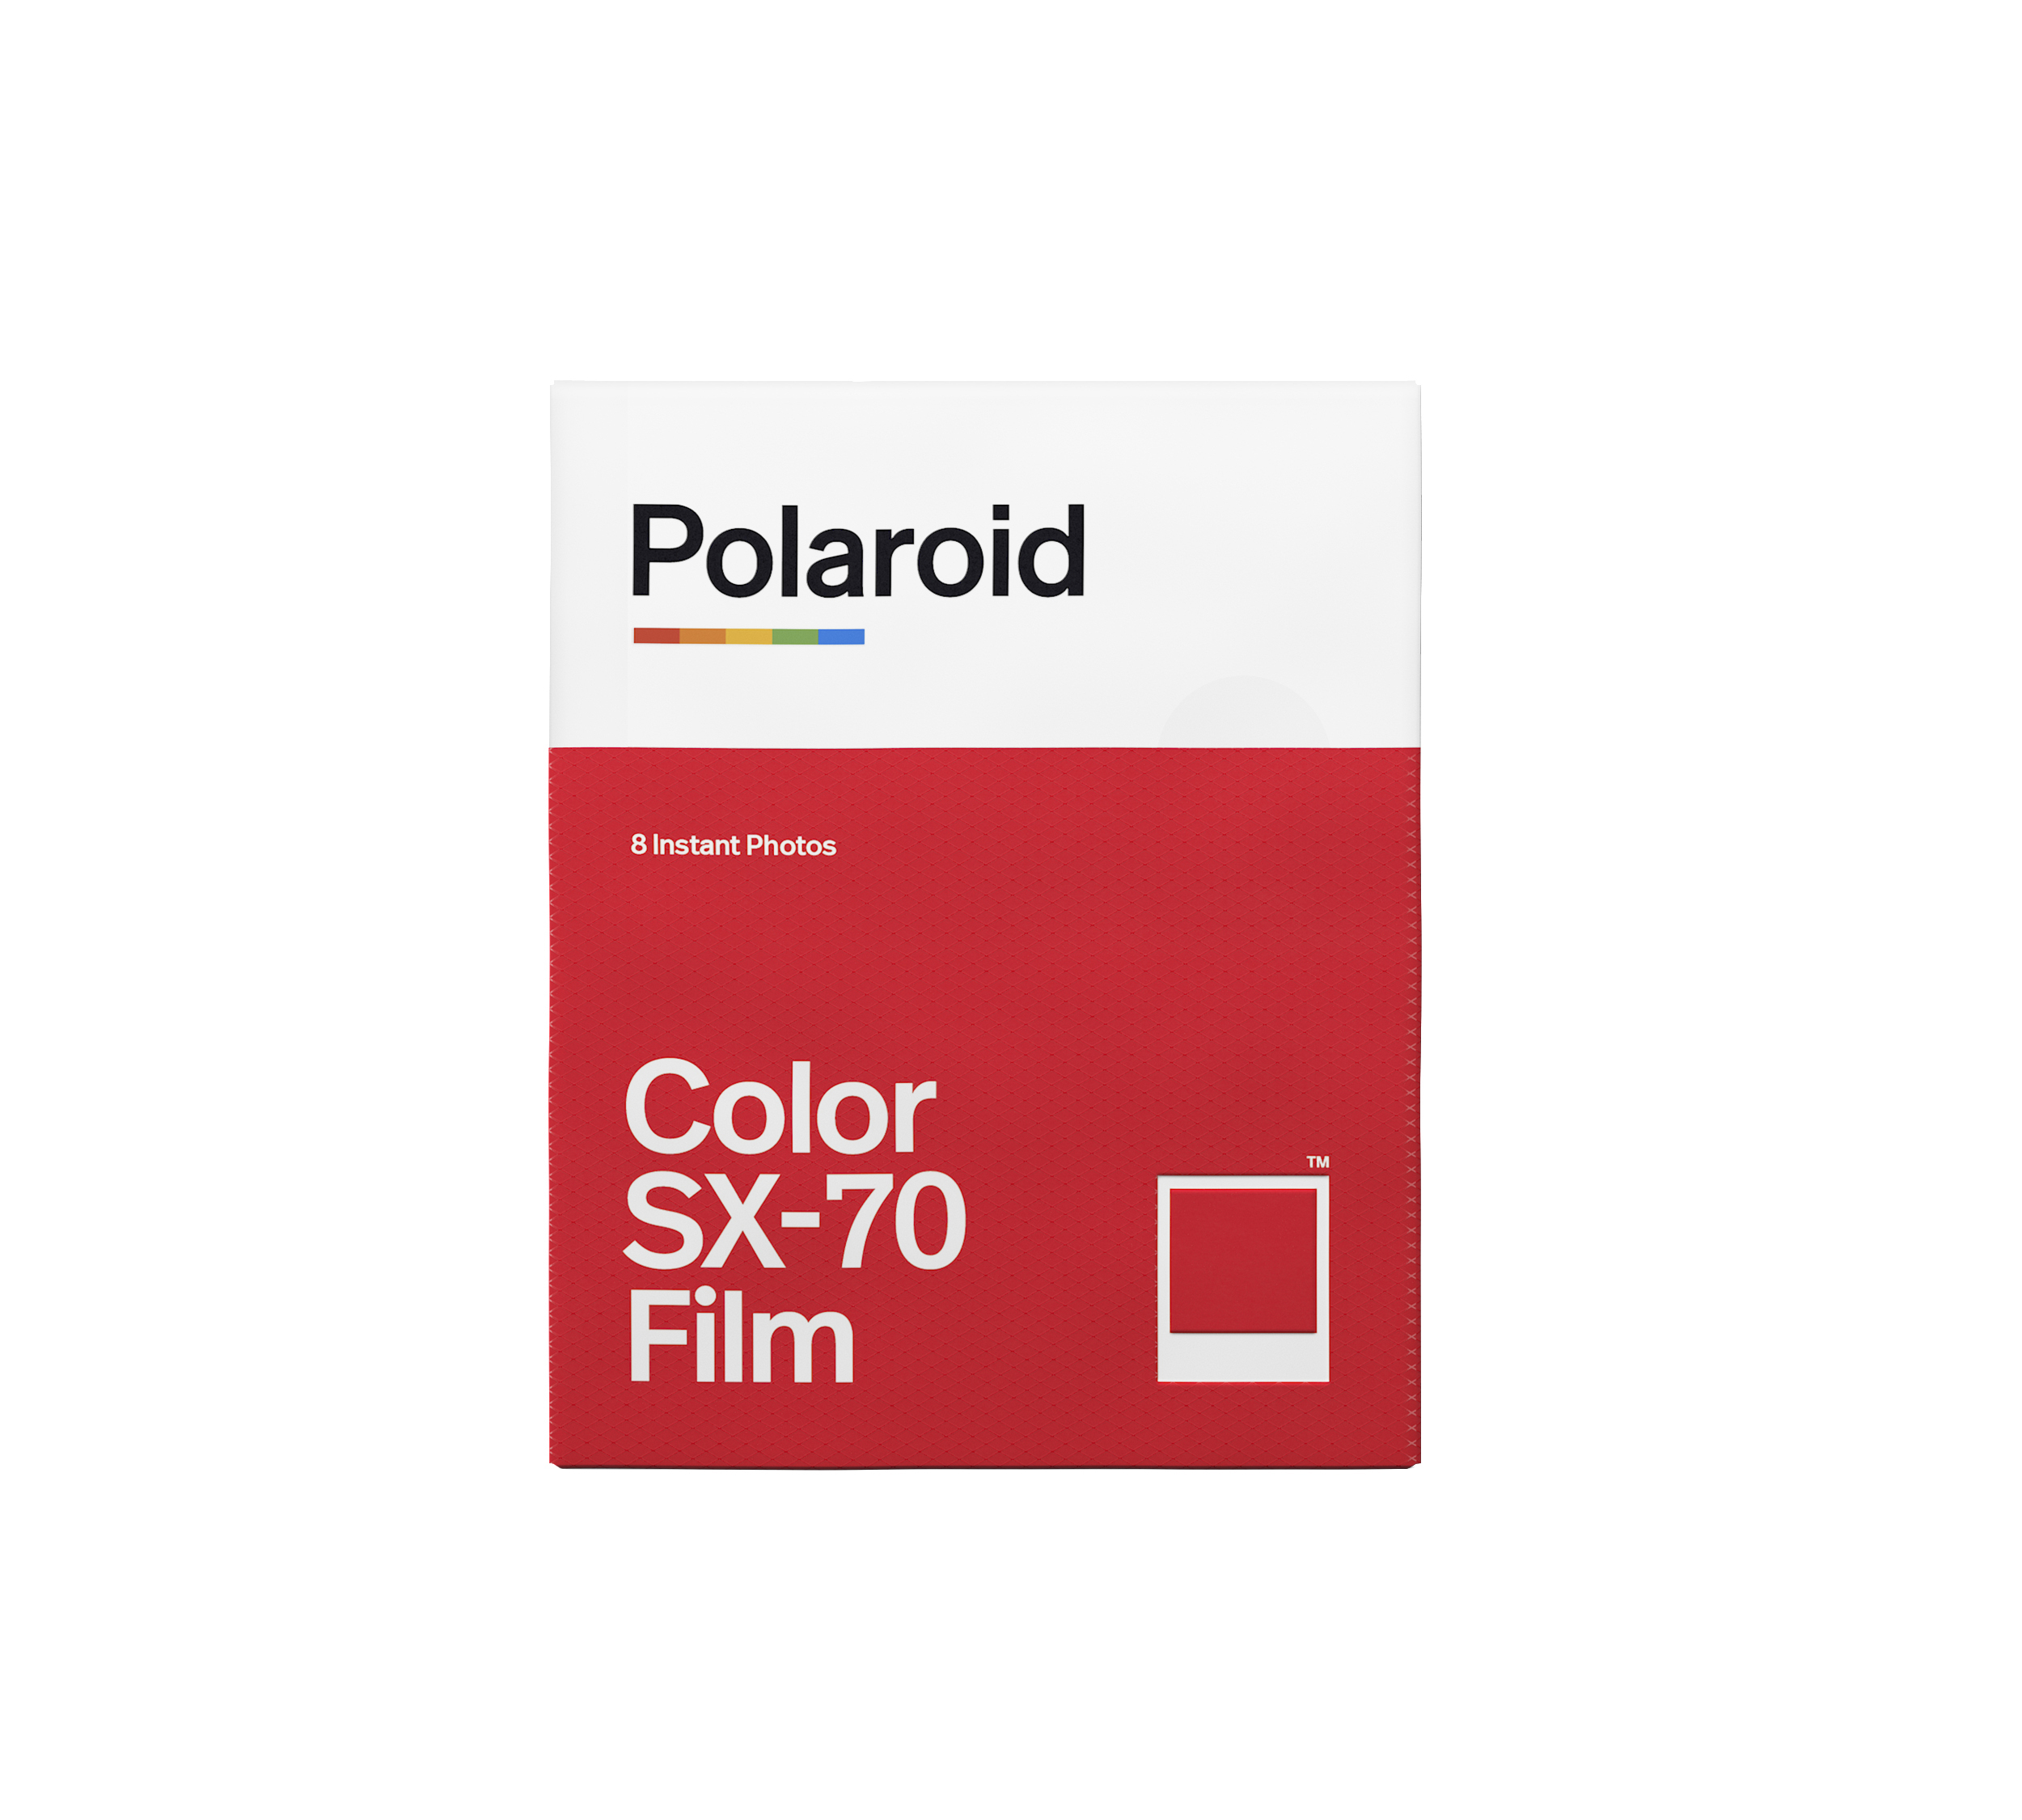 Sofortbildfilm weißer POLAROID Rahmen Farbe für SX-70 Sofortbildfilm